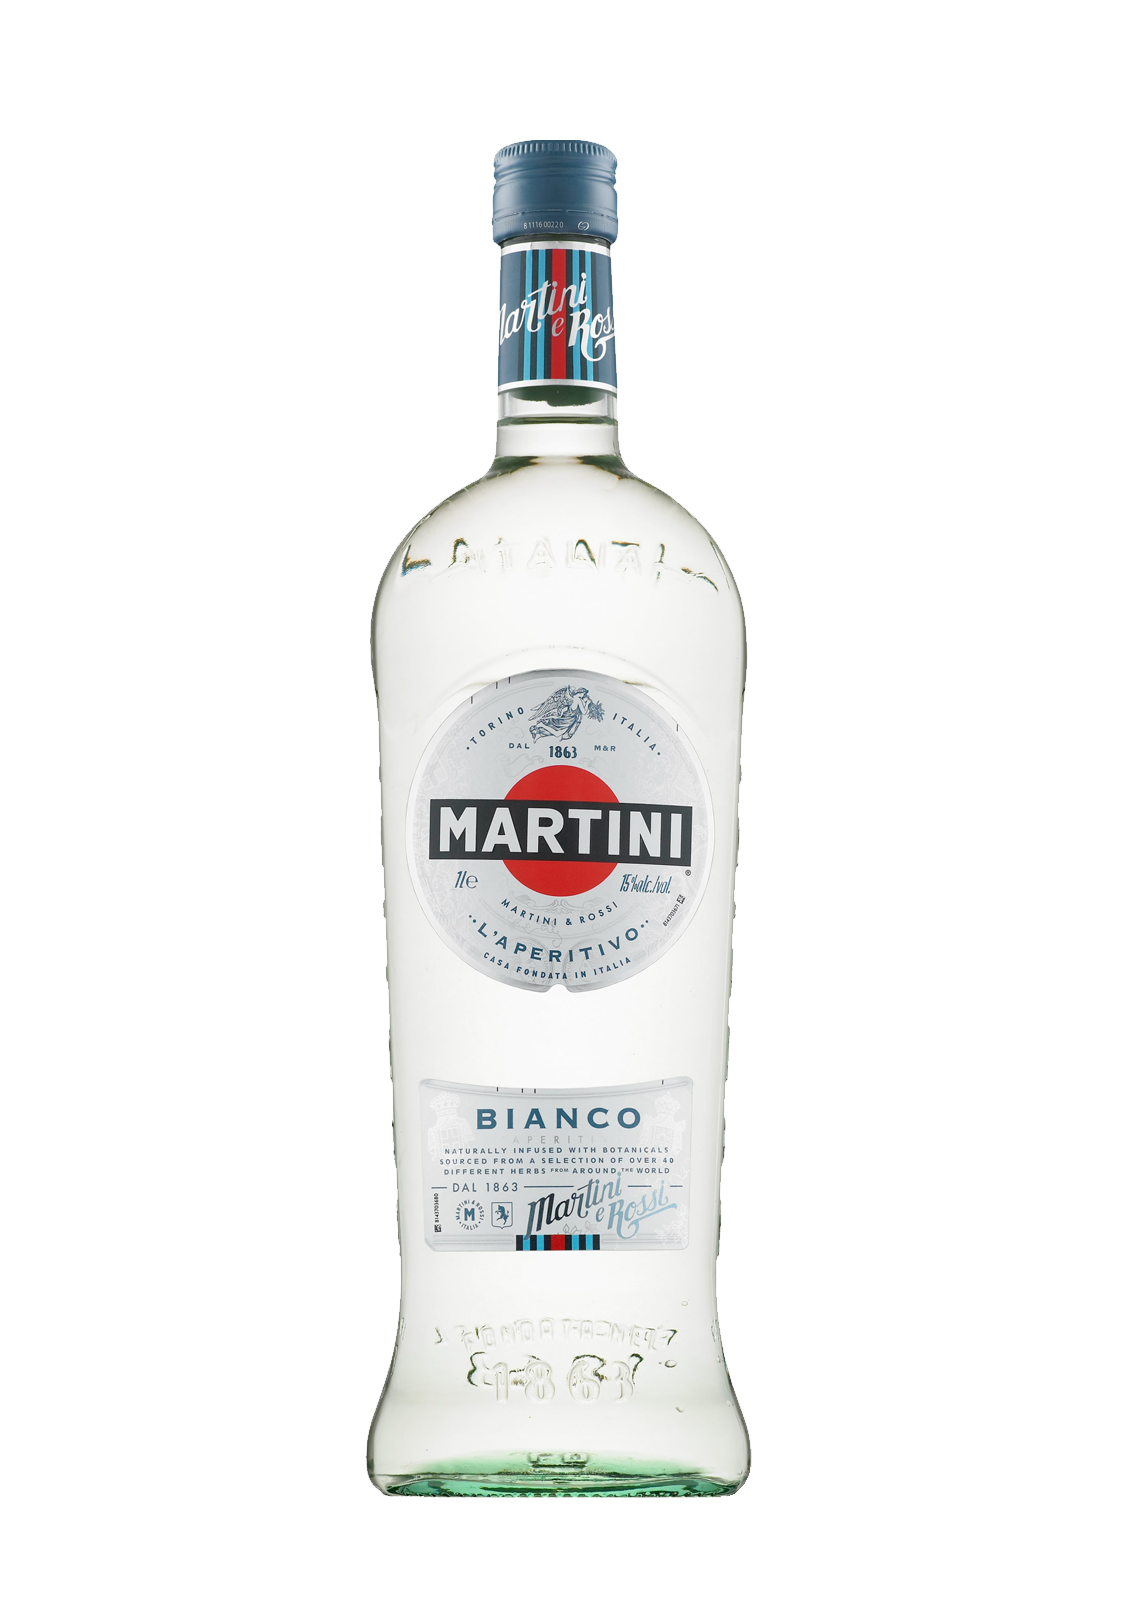 Drinks torino martini bianco How to